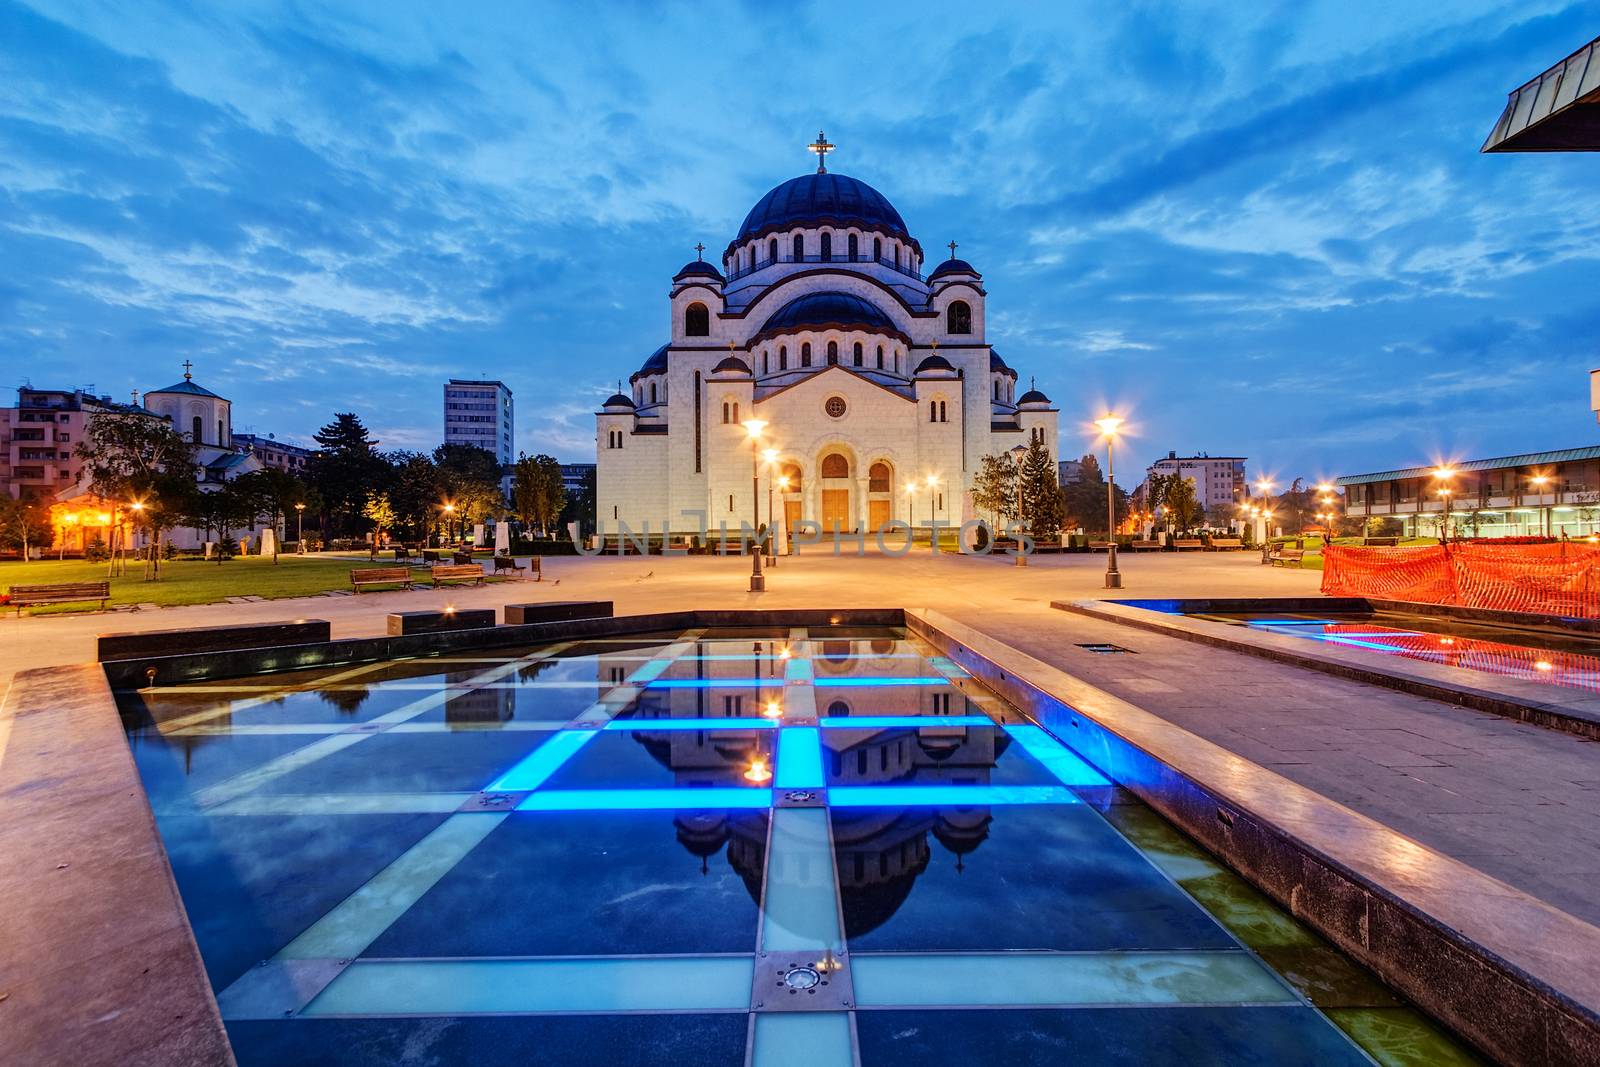 Saint Sava temple with fountain in Belgrade Serbia